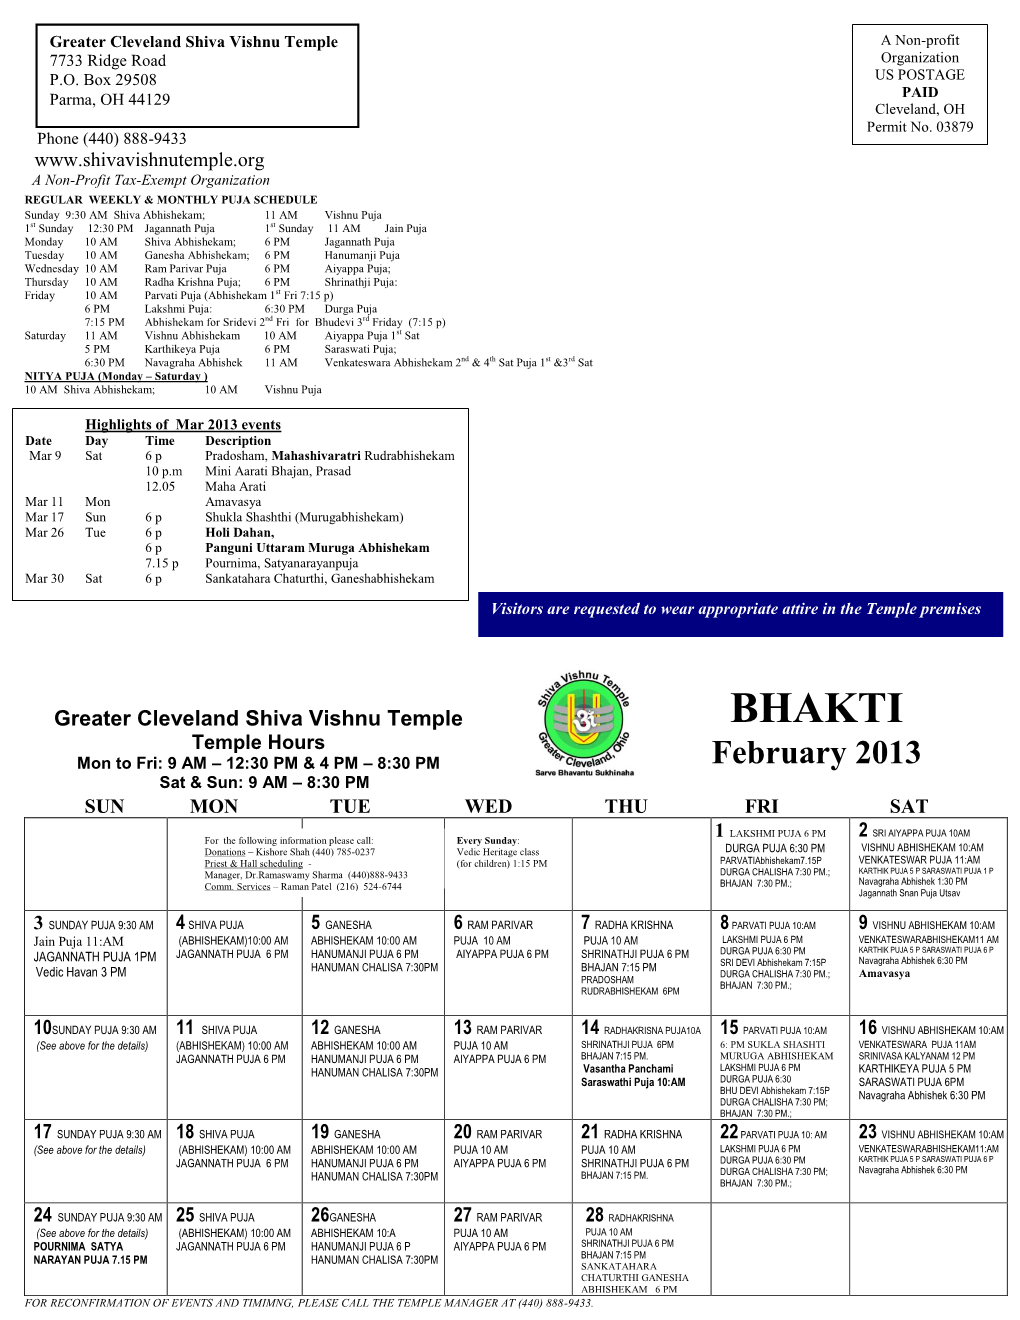 BHAKTI Temple Hours Mon to Fri: 9 AM – 12:30 PM & 4 PM – 8:30 PM February 2013